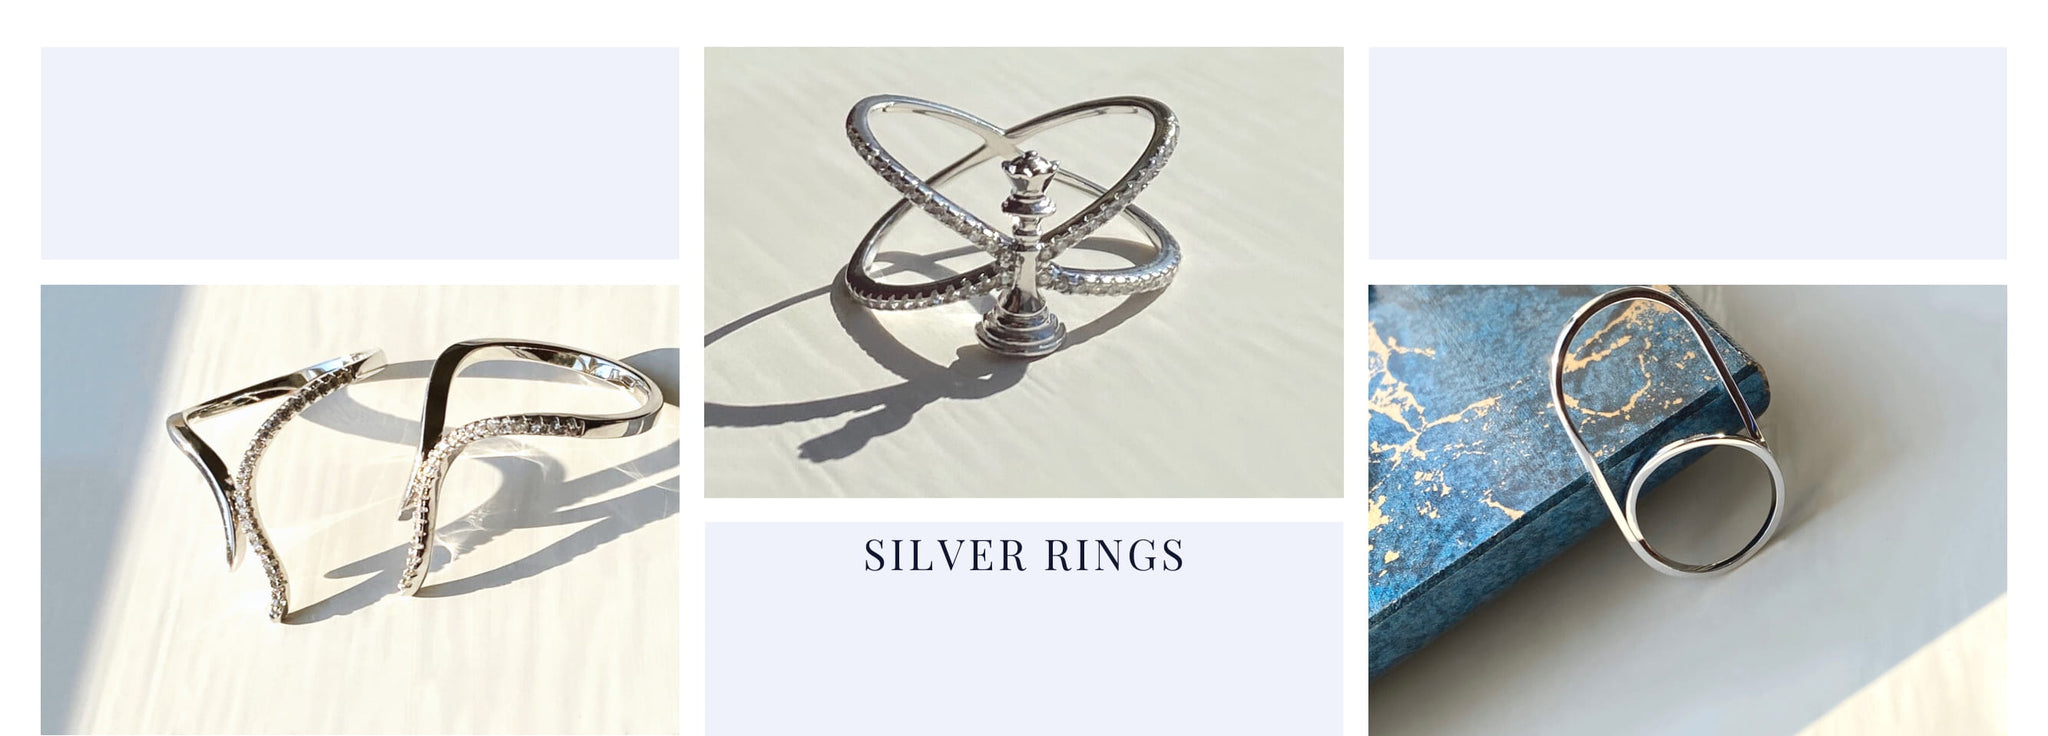 Bella mayford Silver Rings